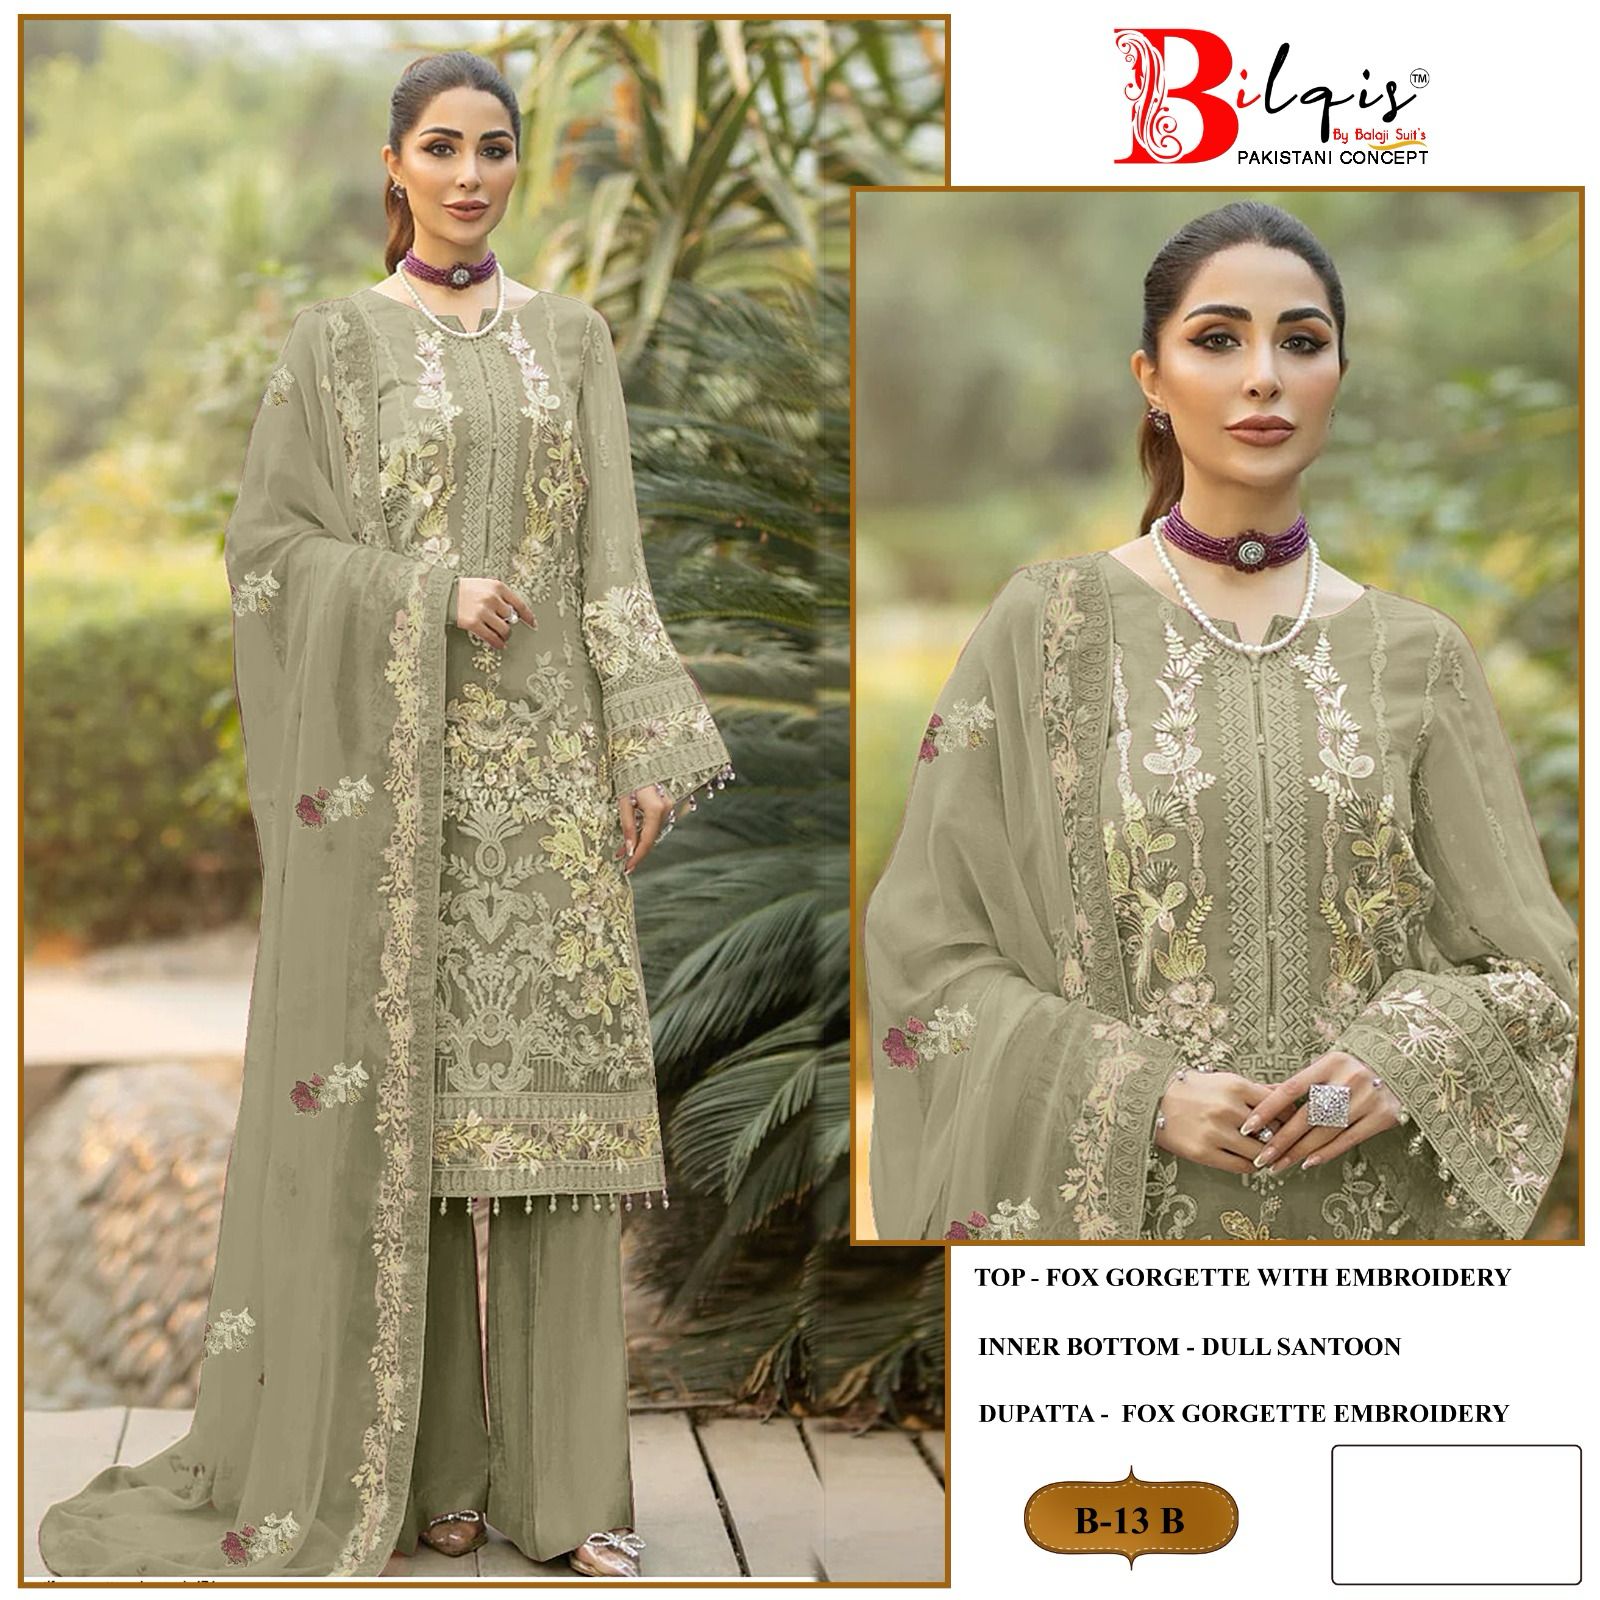 Beautiful Designer Bilqis B 13 Faux Georgette Pakistani Salwar Suits